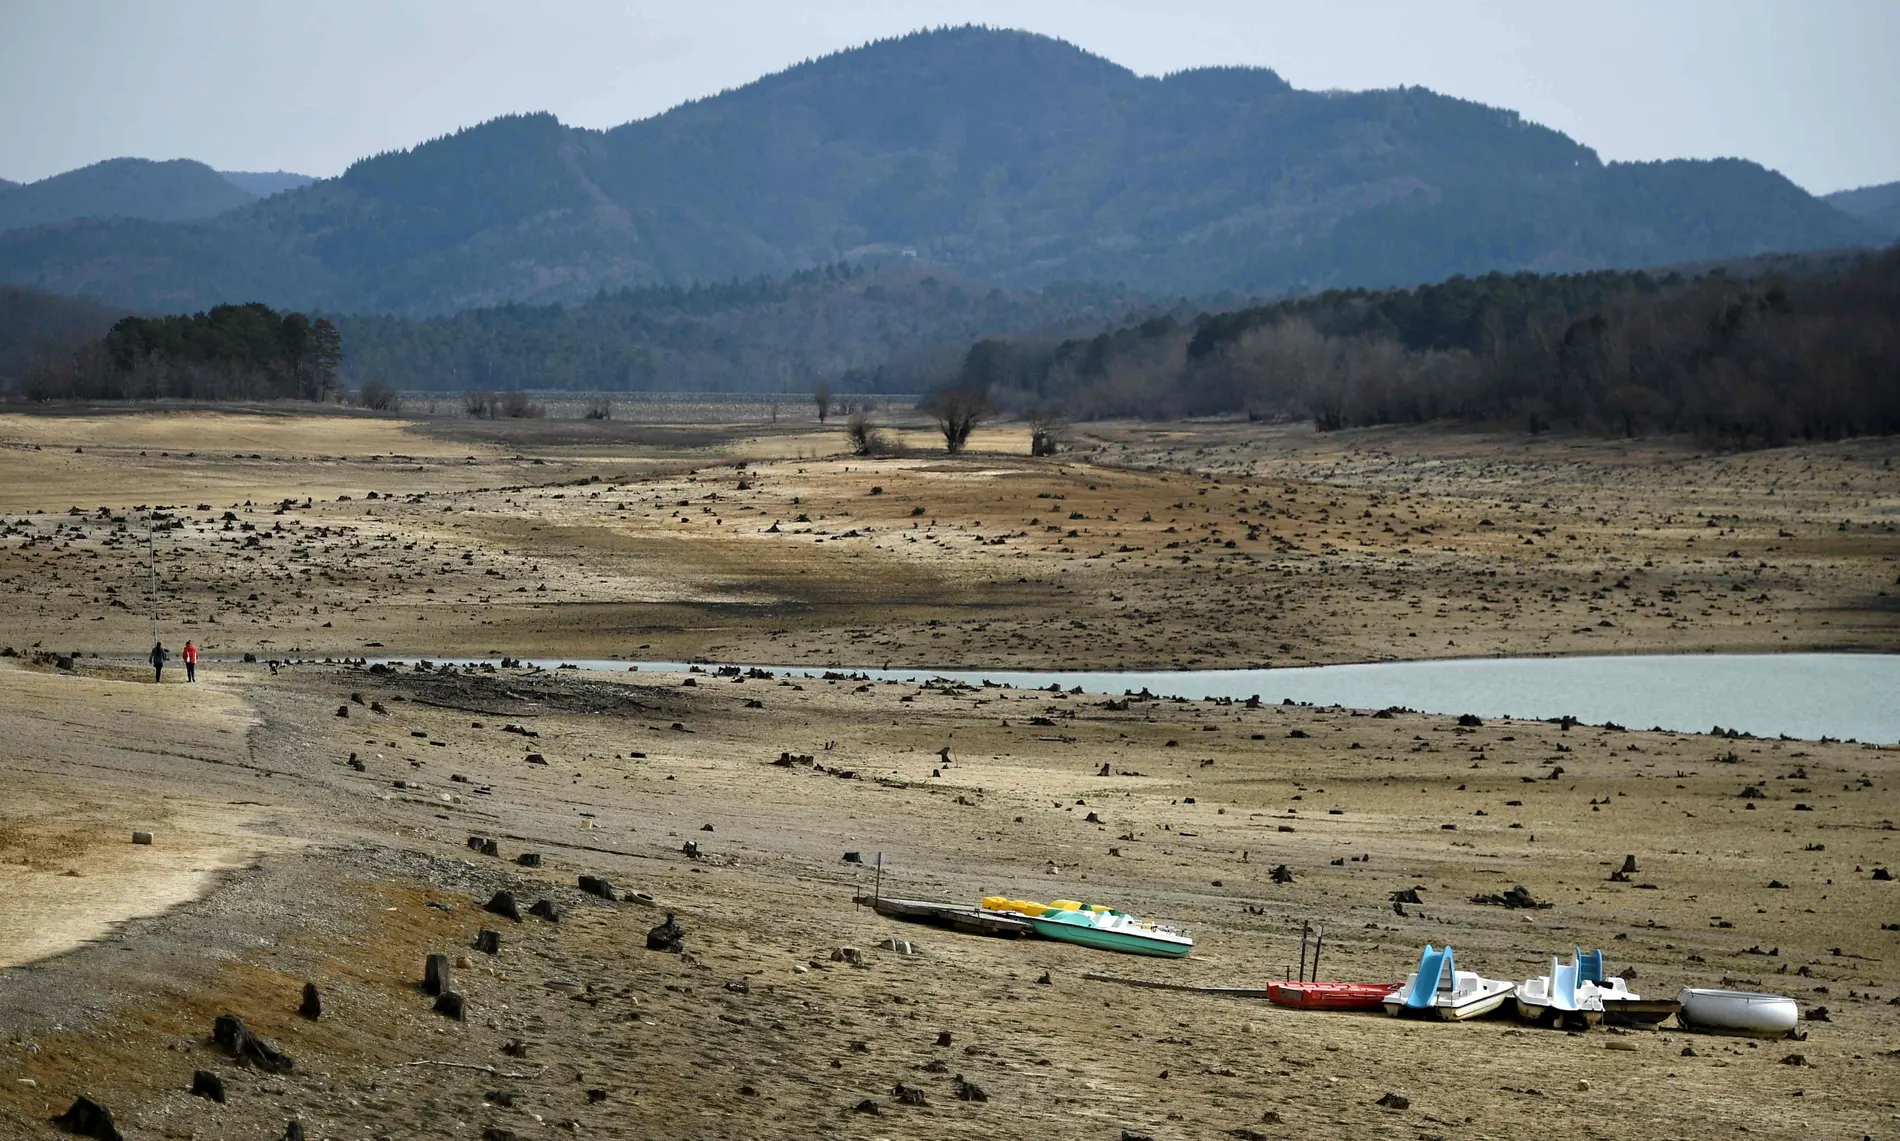 “Very precarious - Europe faces growing water crisis..."